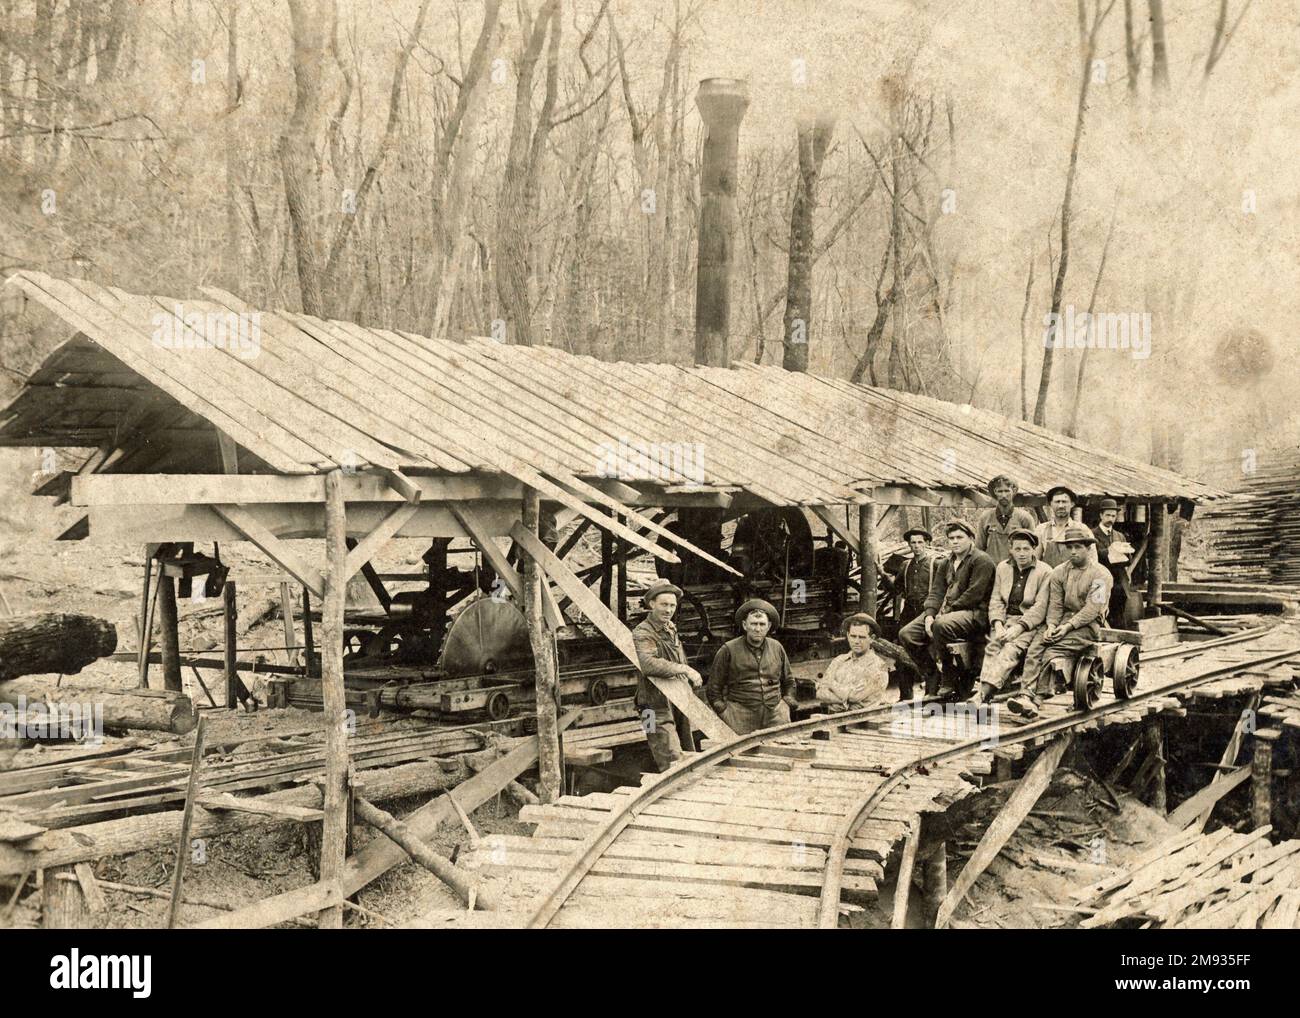 Holzfällerei um 1900, Sägewerk um die Jahrhundertwende, Stockfoto